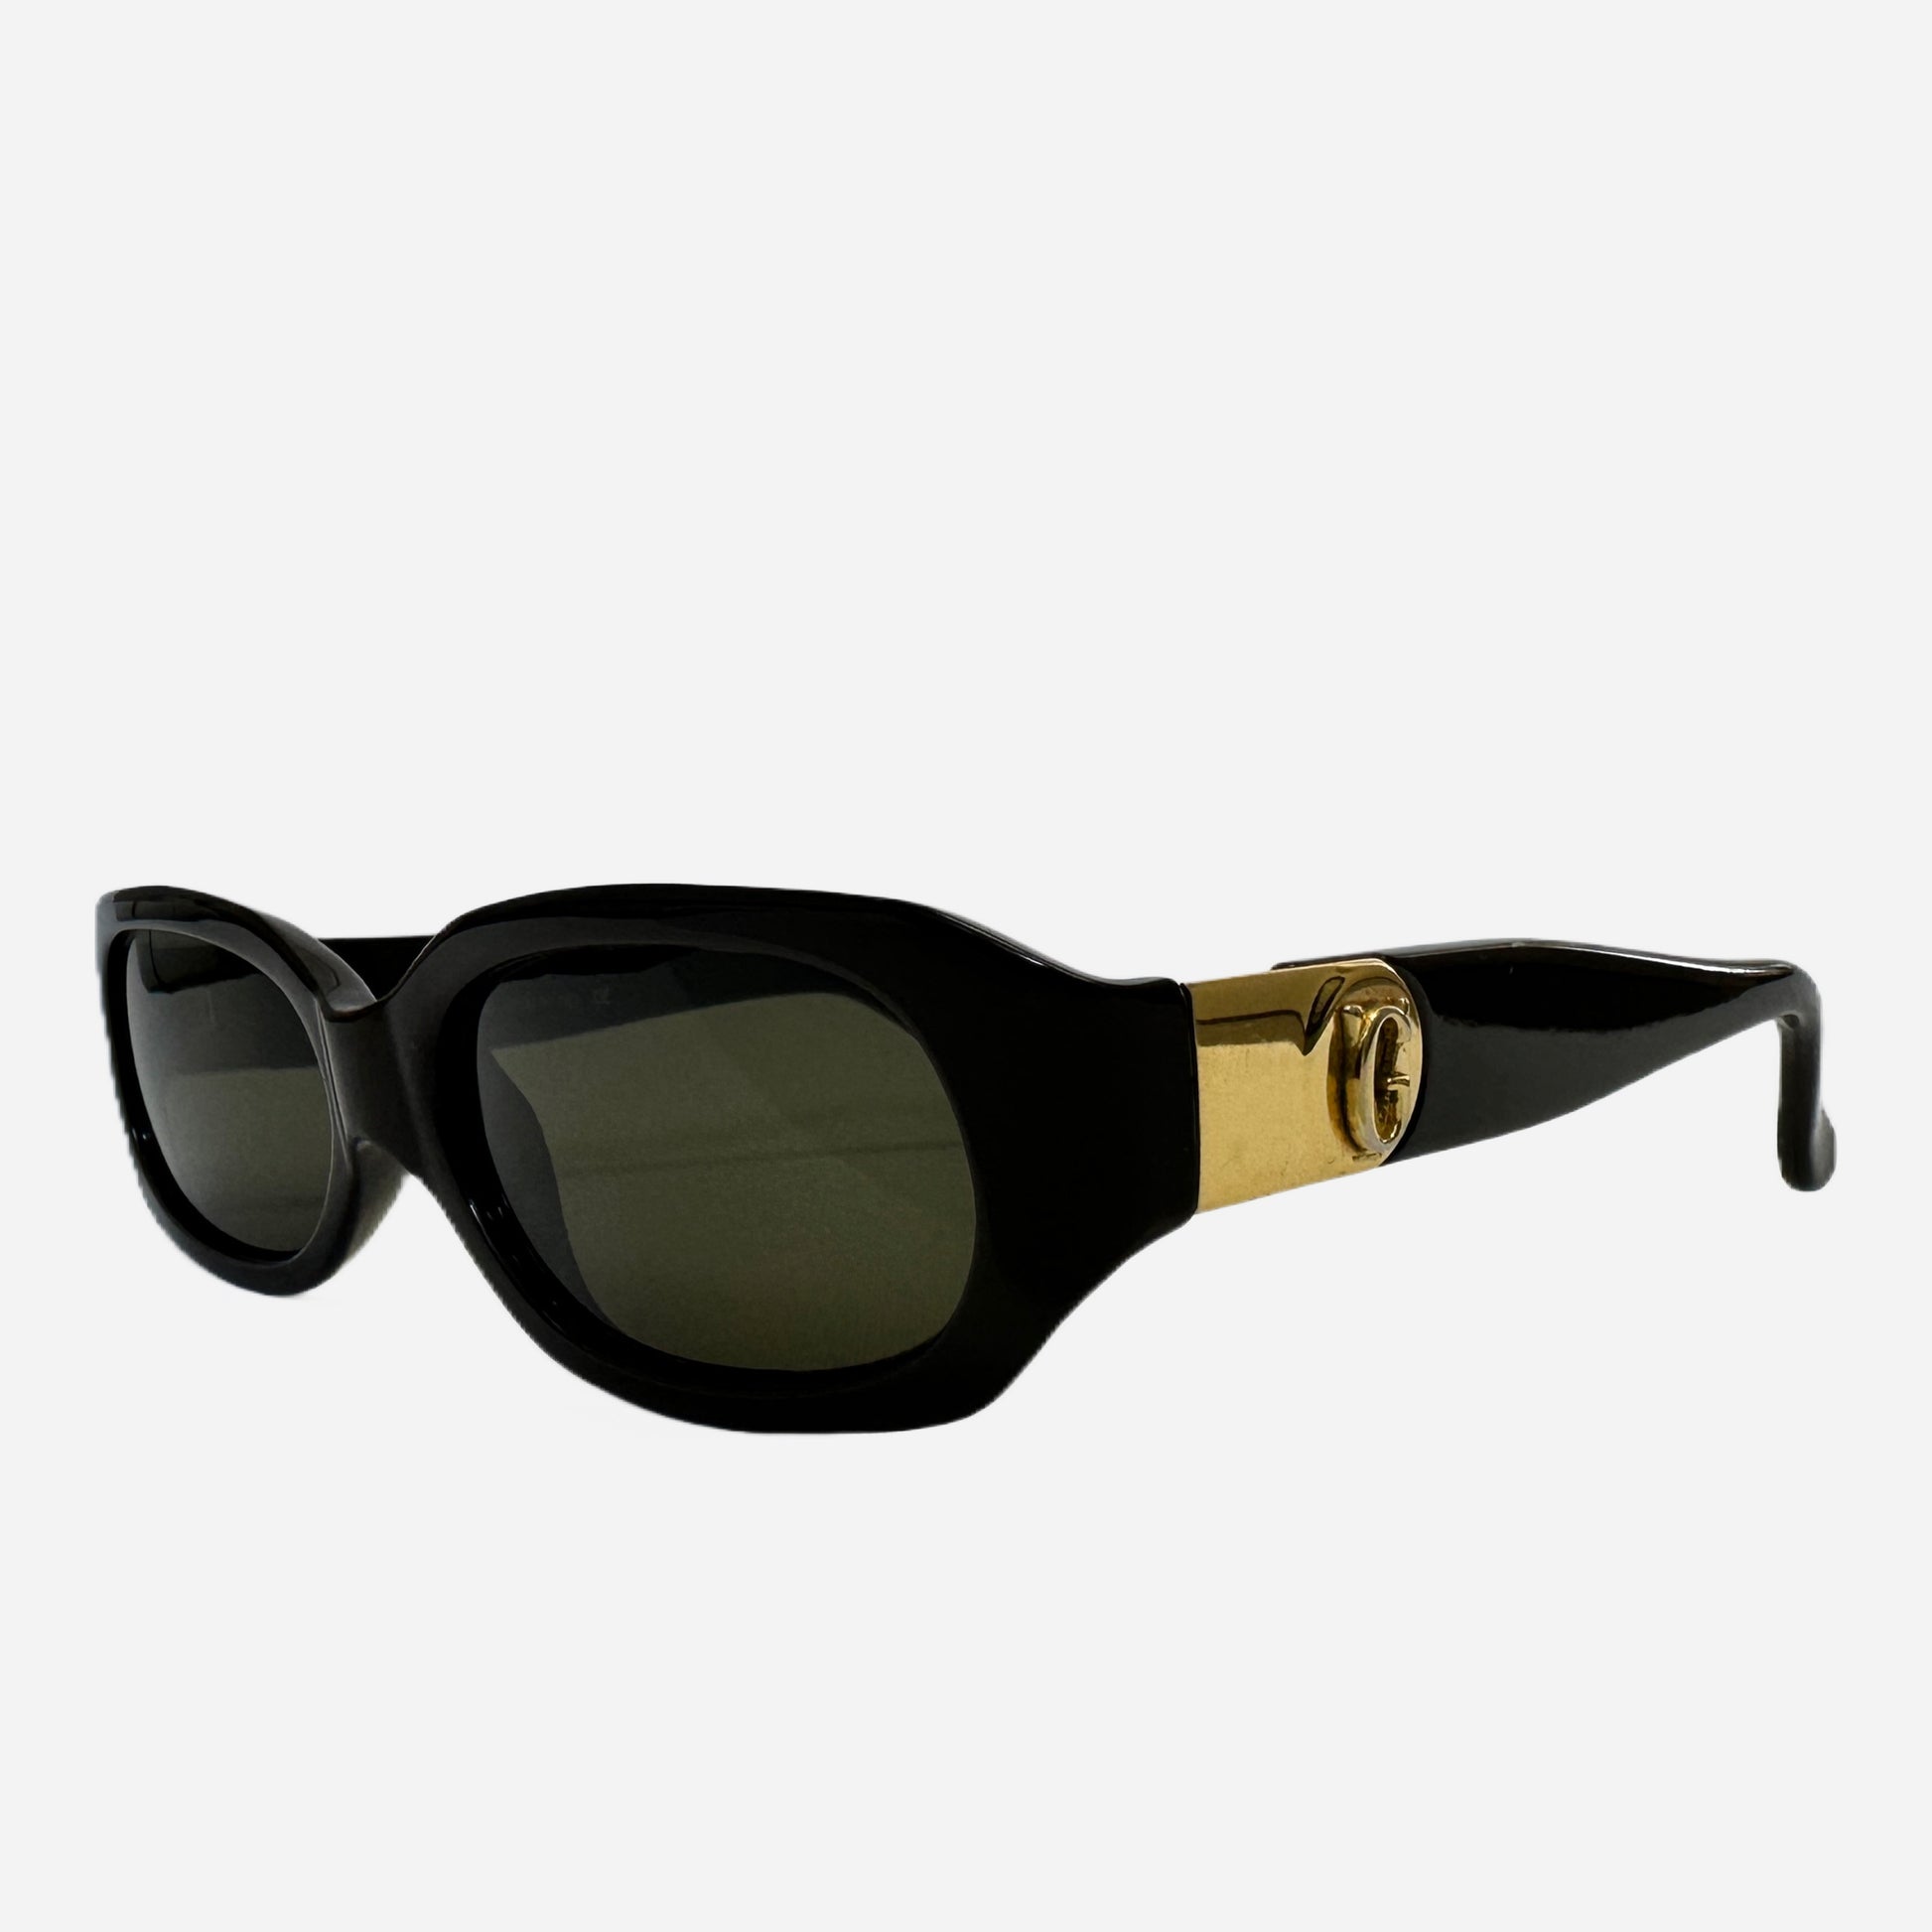 Vintage-Gianni-Versace-Sonnenbrille-Sunglasses-531-the-seekers-medusa-front-side